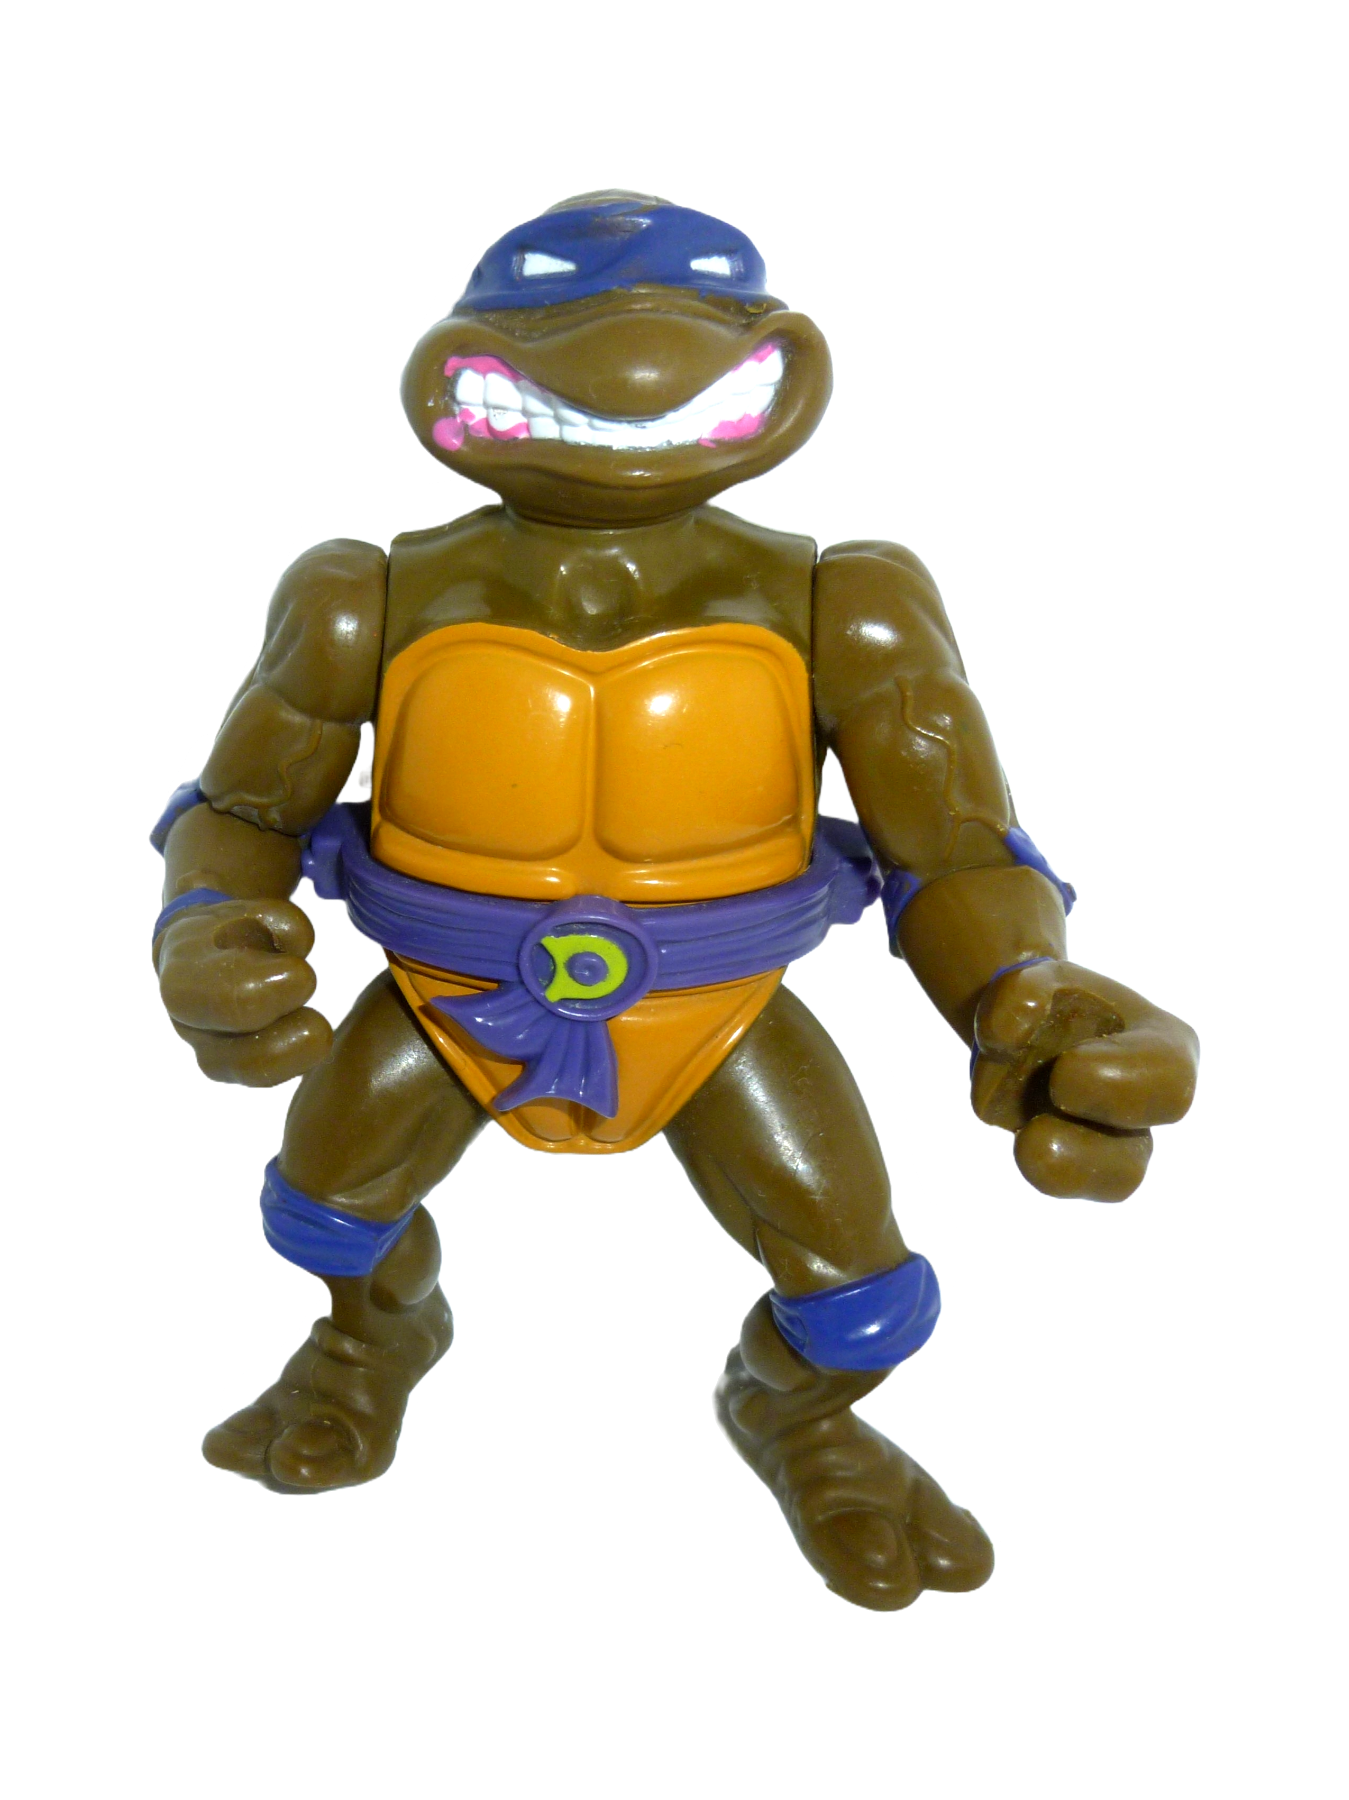 Donatello With Storage Shell - defective 1990 Mirage Studios / Playmates Toys